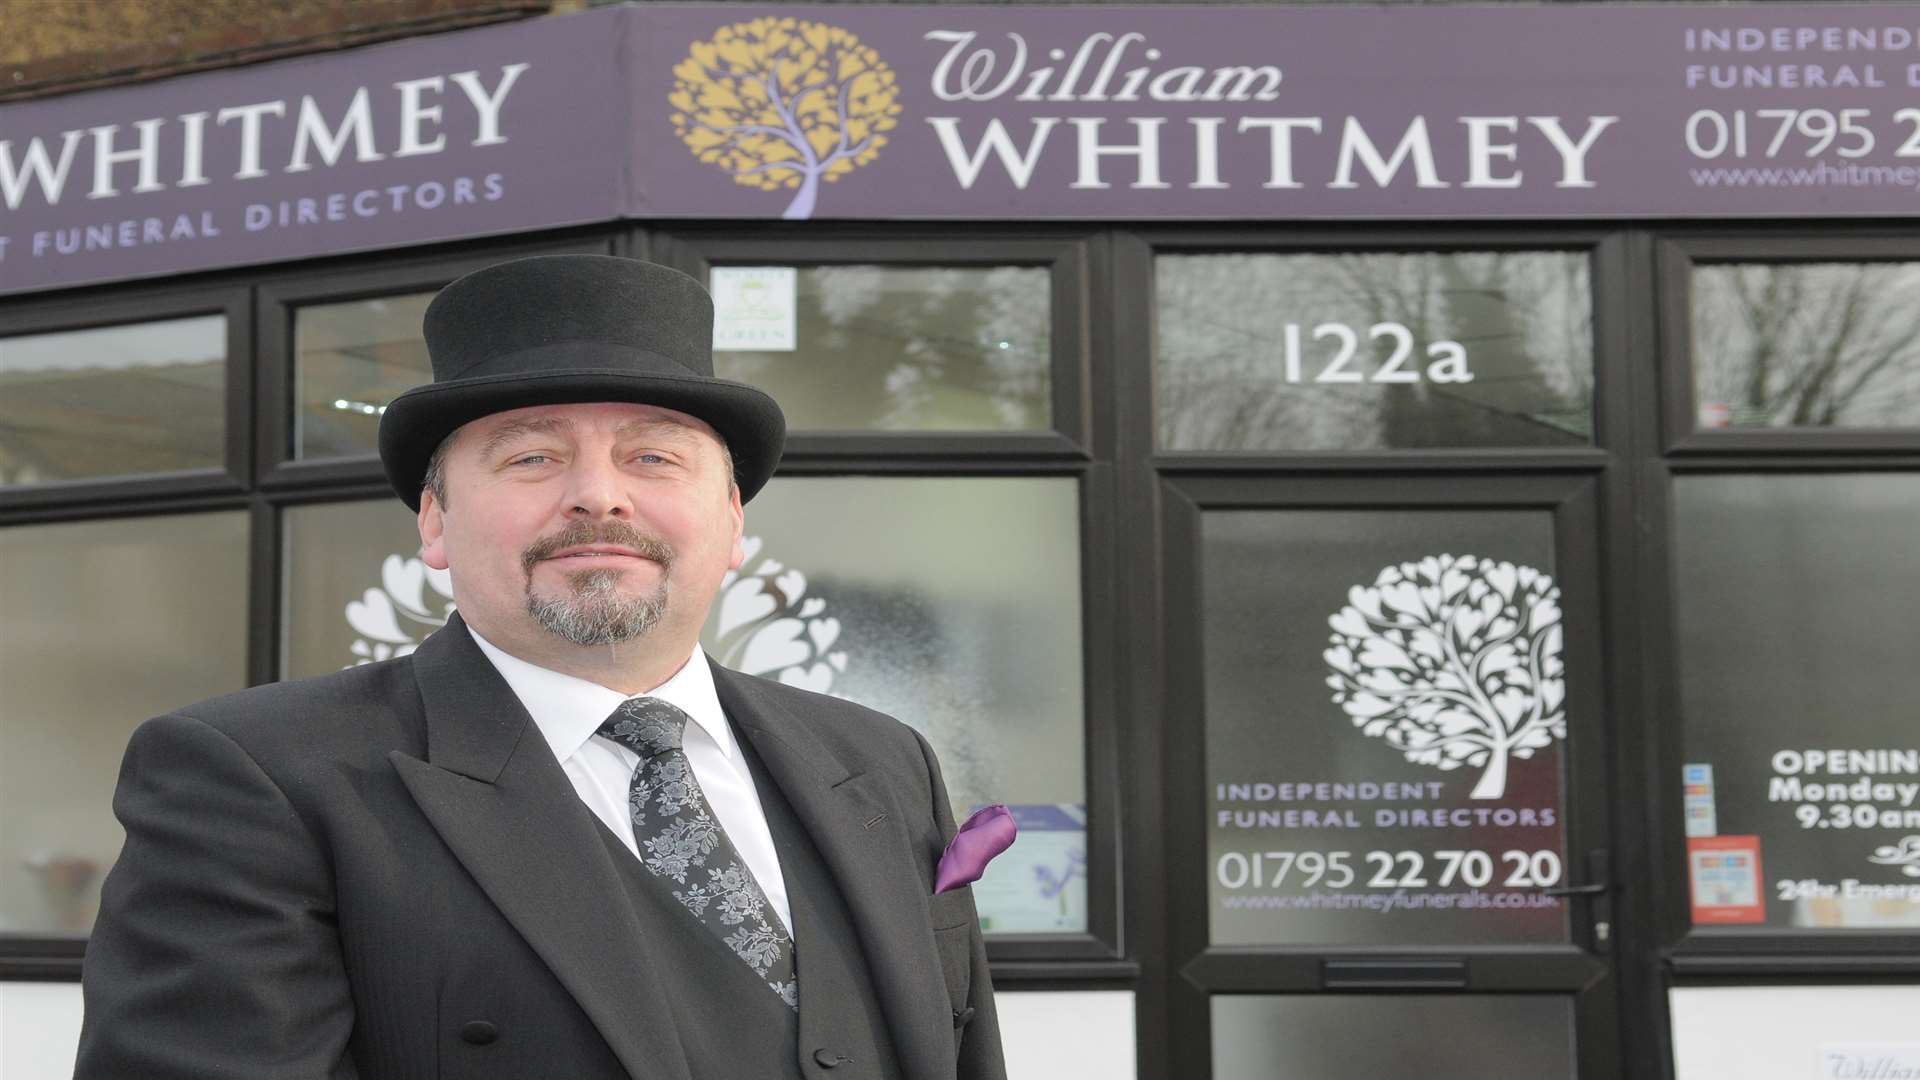 William Whitmey Funeral Directors. Picture: Ruth Cuerden